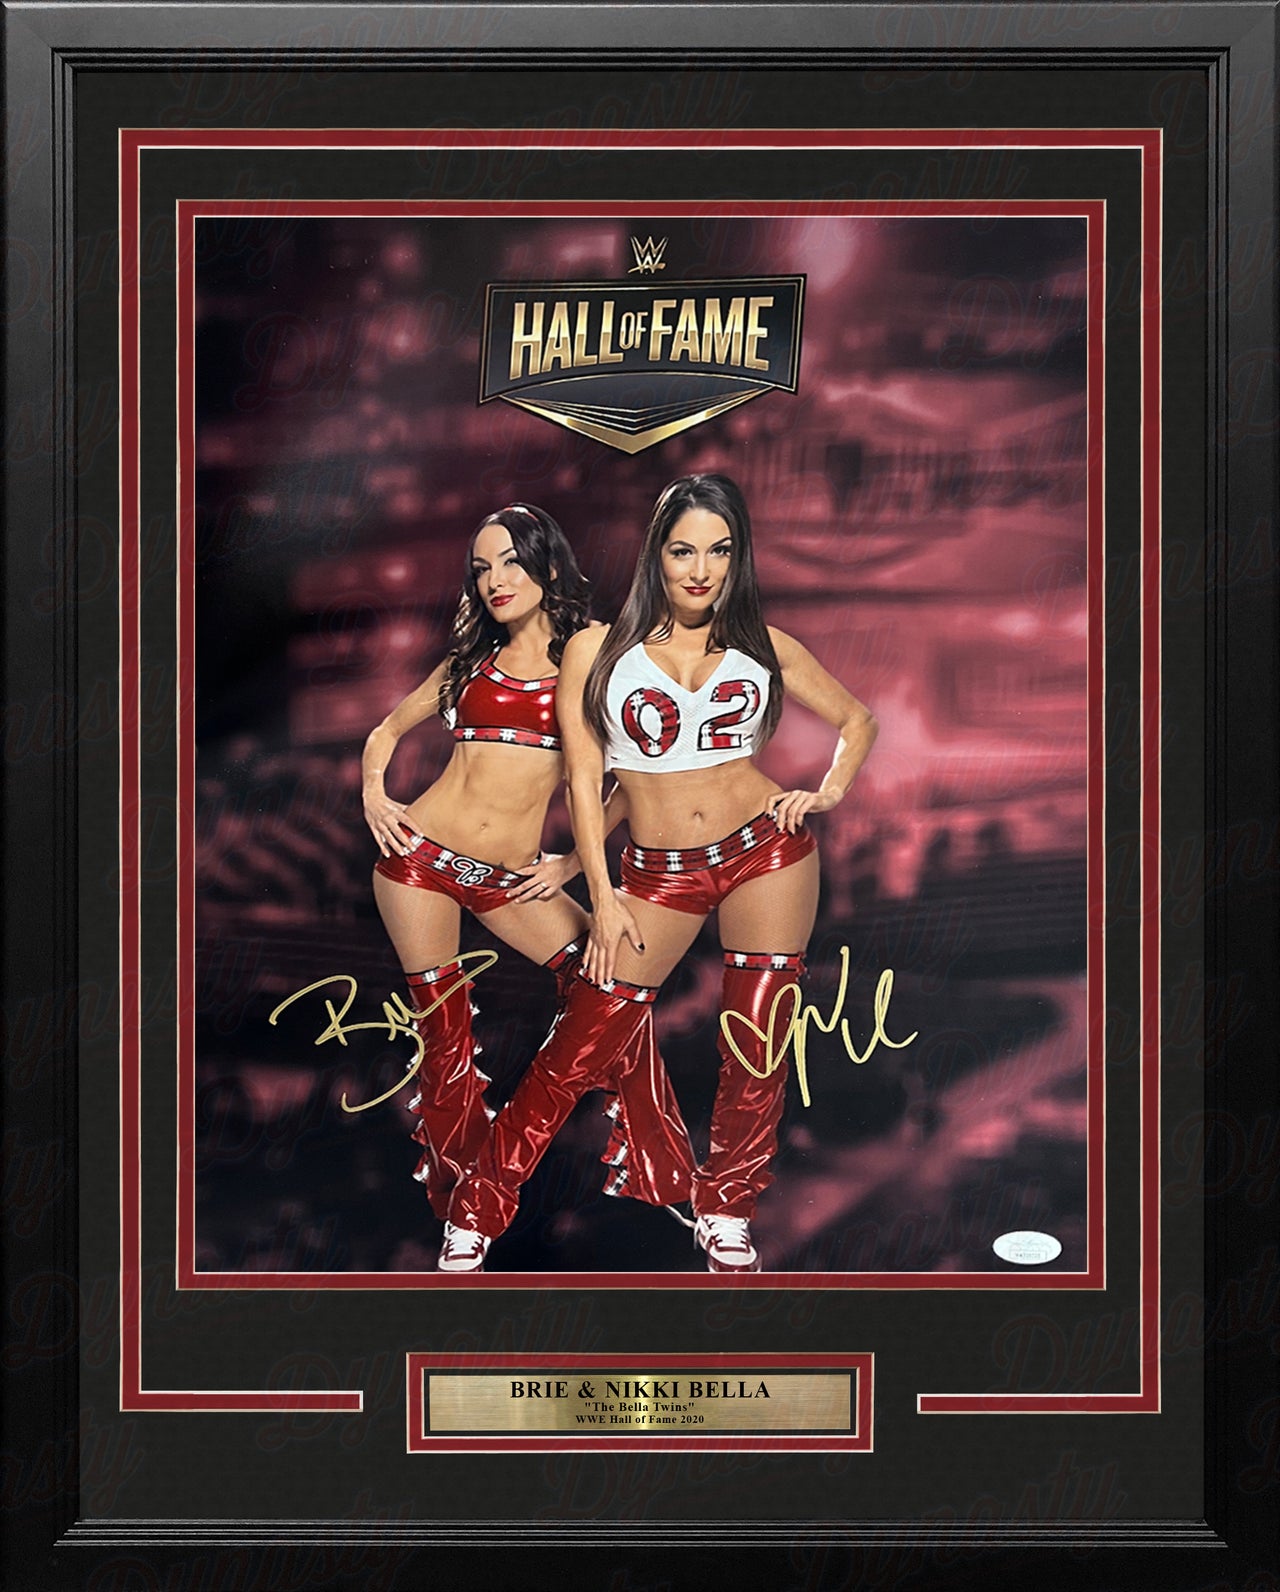 Brie & Nikki Bella Autographed Framed WWE Wrestling Bella Twins Collage Photo - Dynasty Sports & Framing 